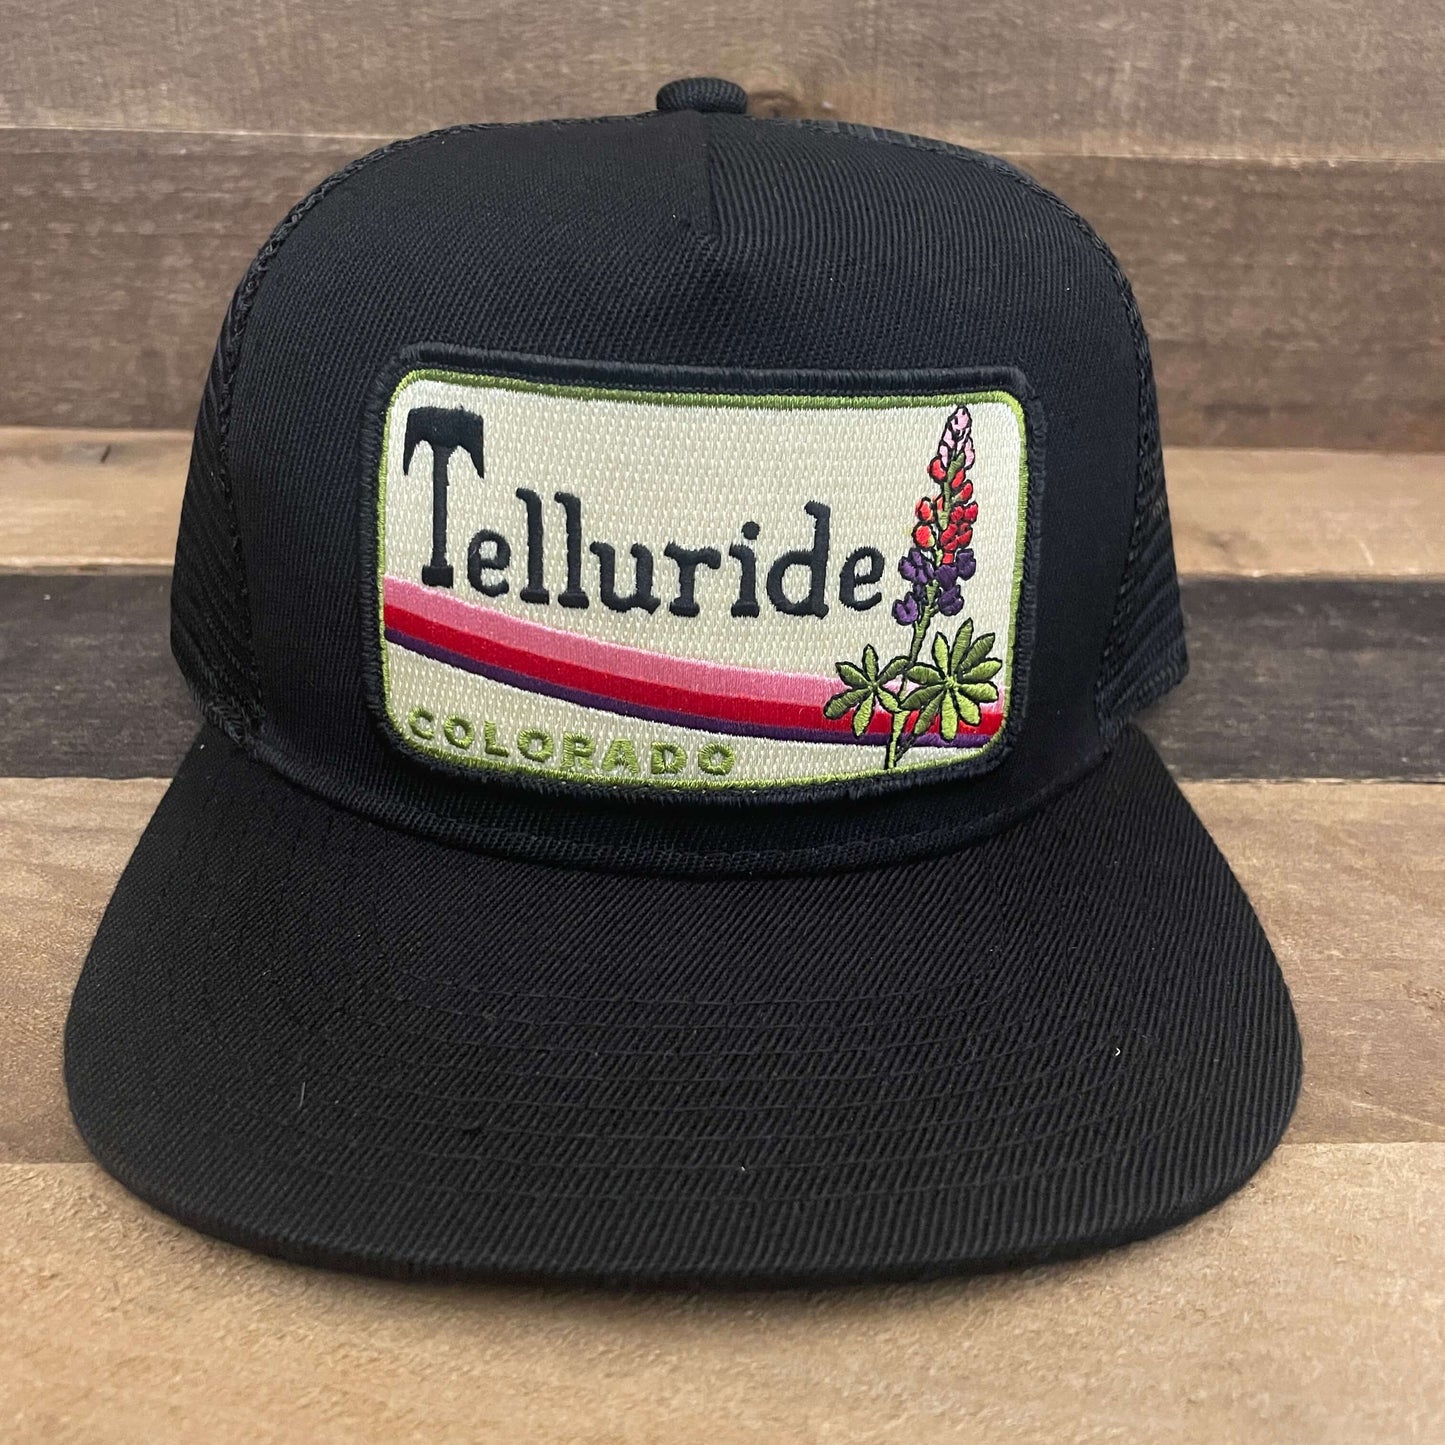 Bart Bridge Telluride Pocket Hat